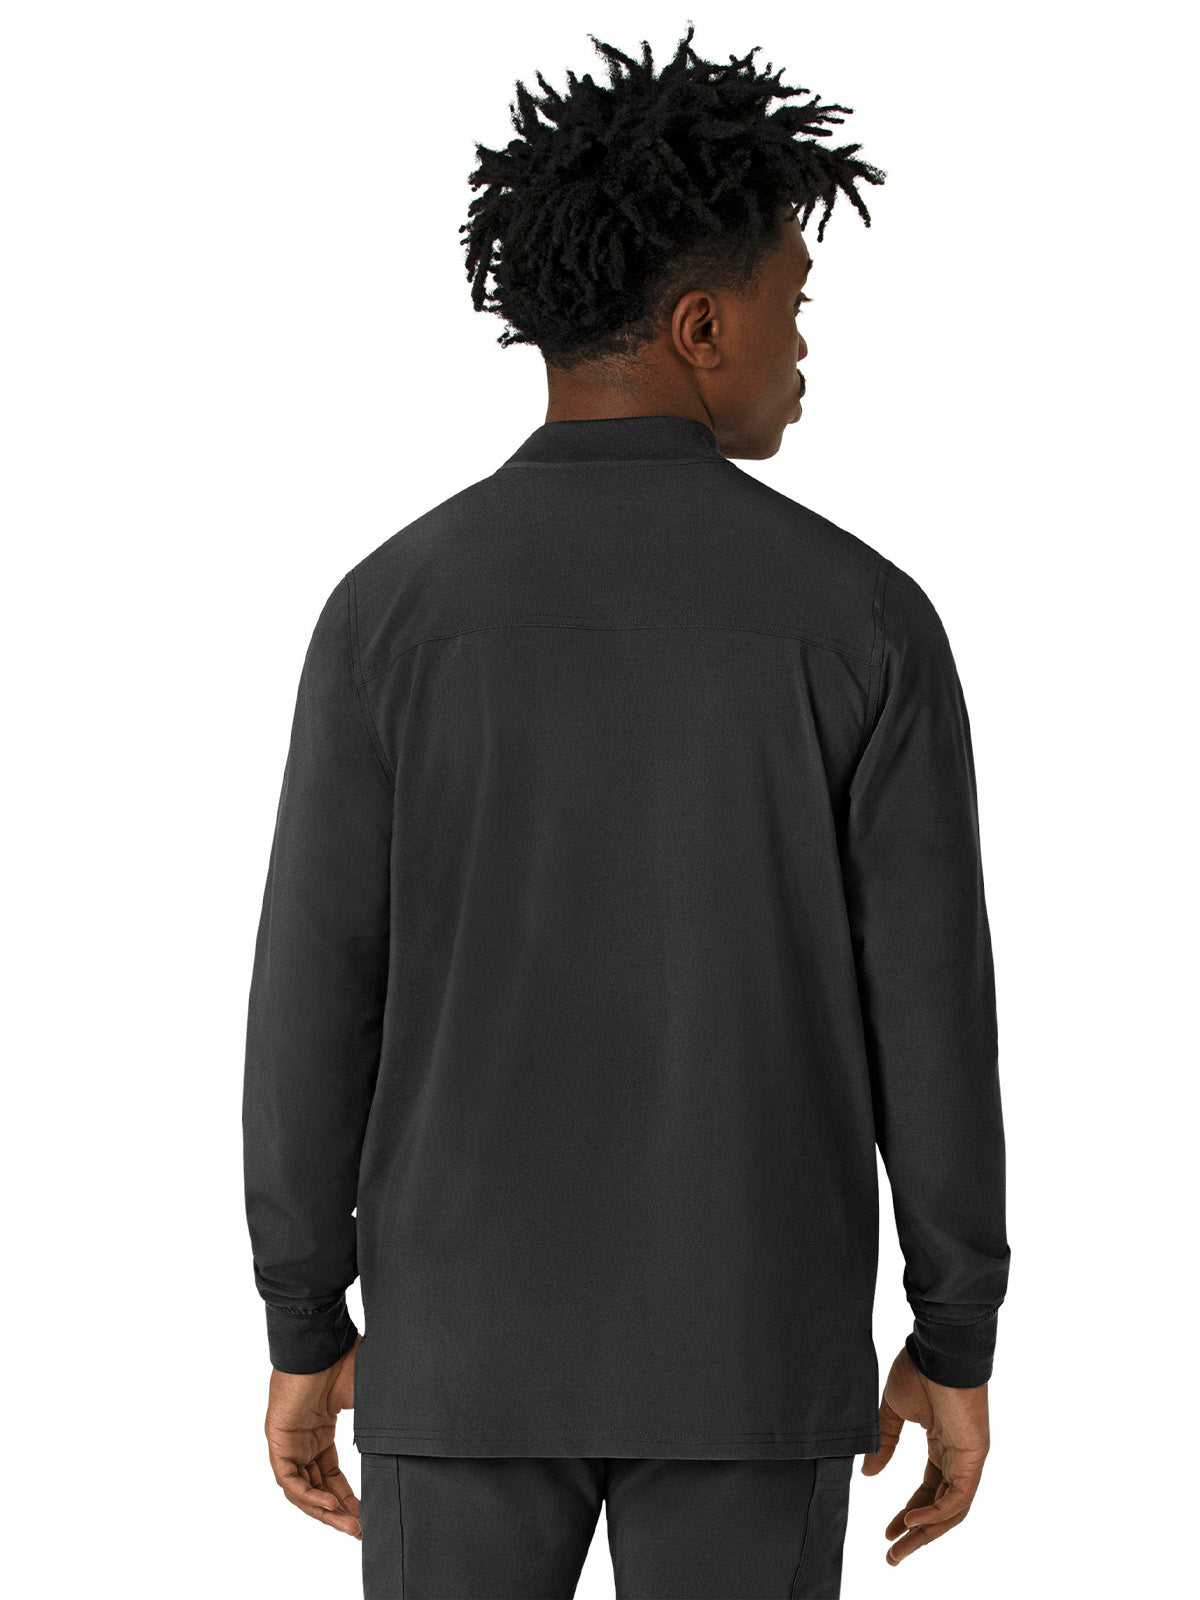 Men's Modern Fit Shirt Jacket - C86210 - Black